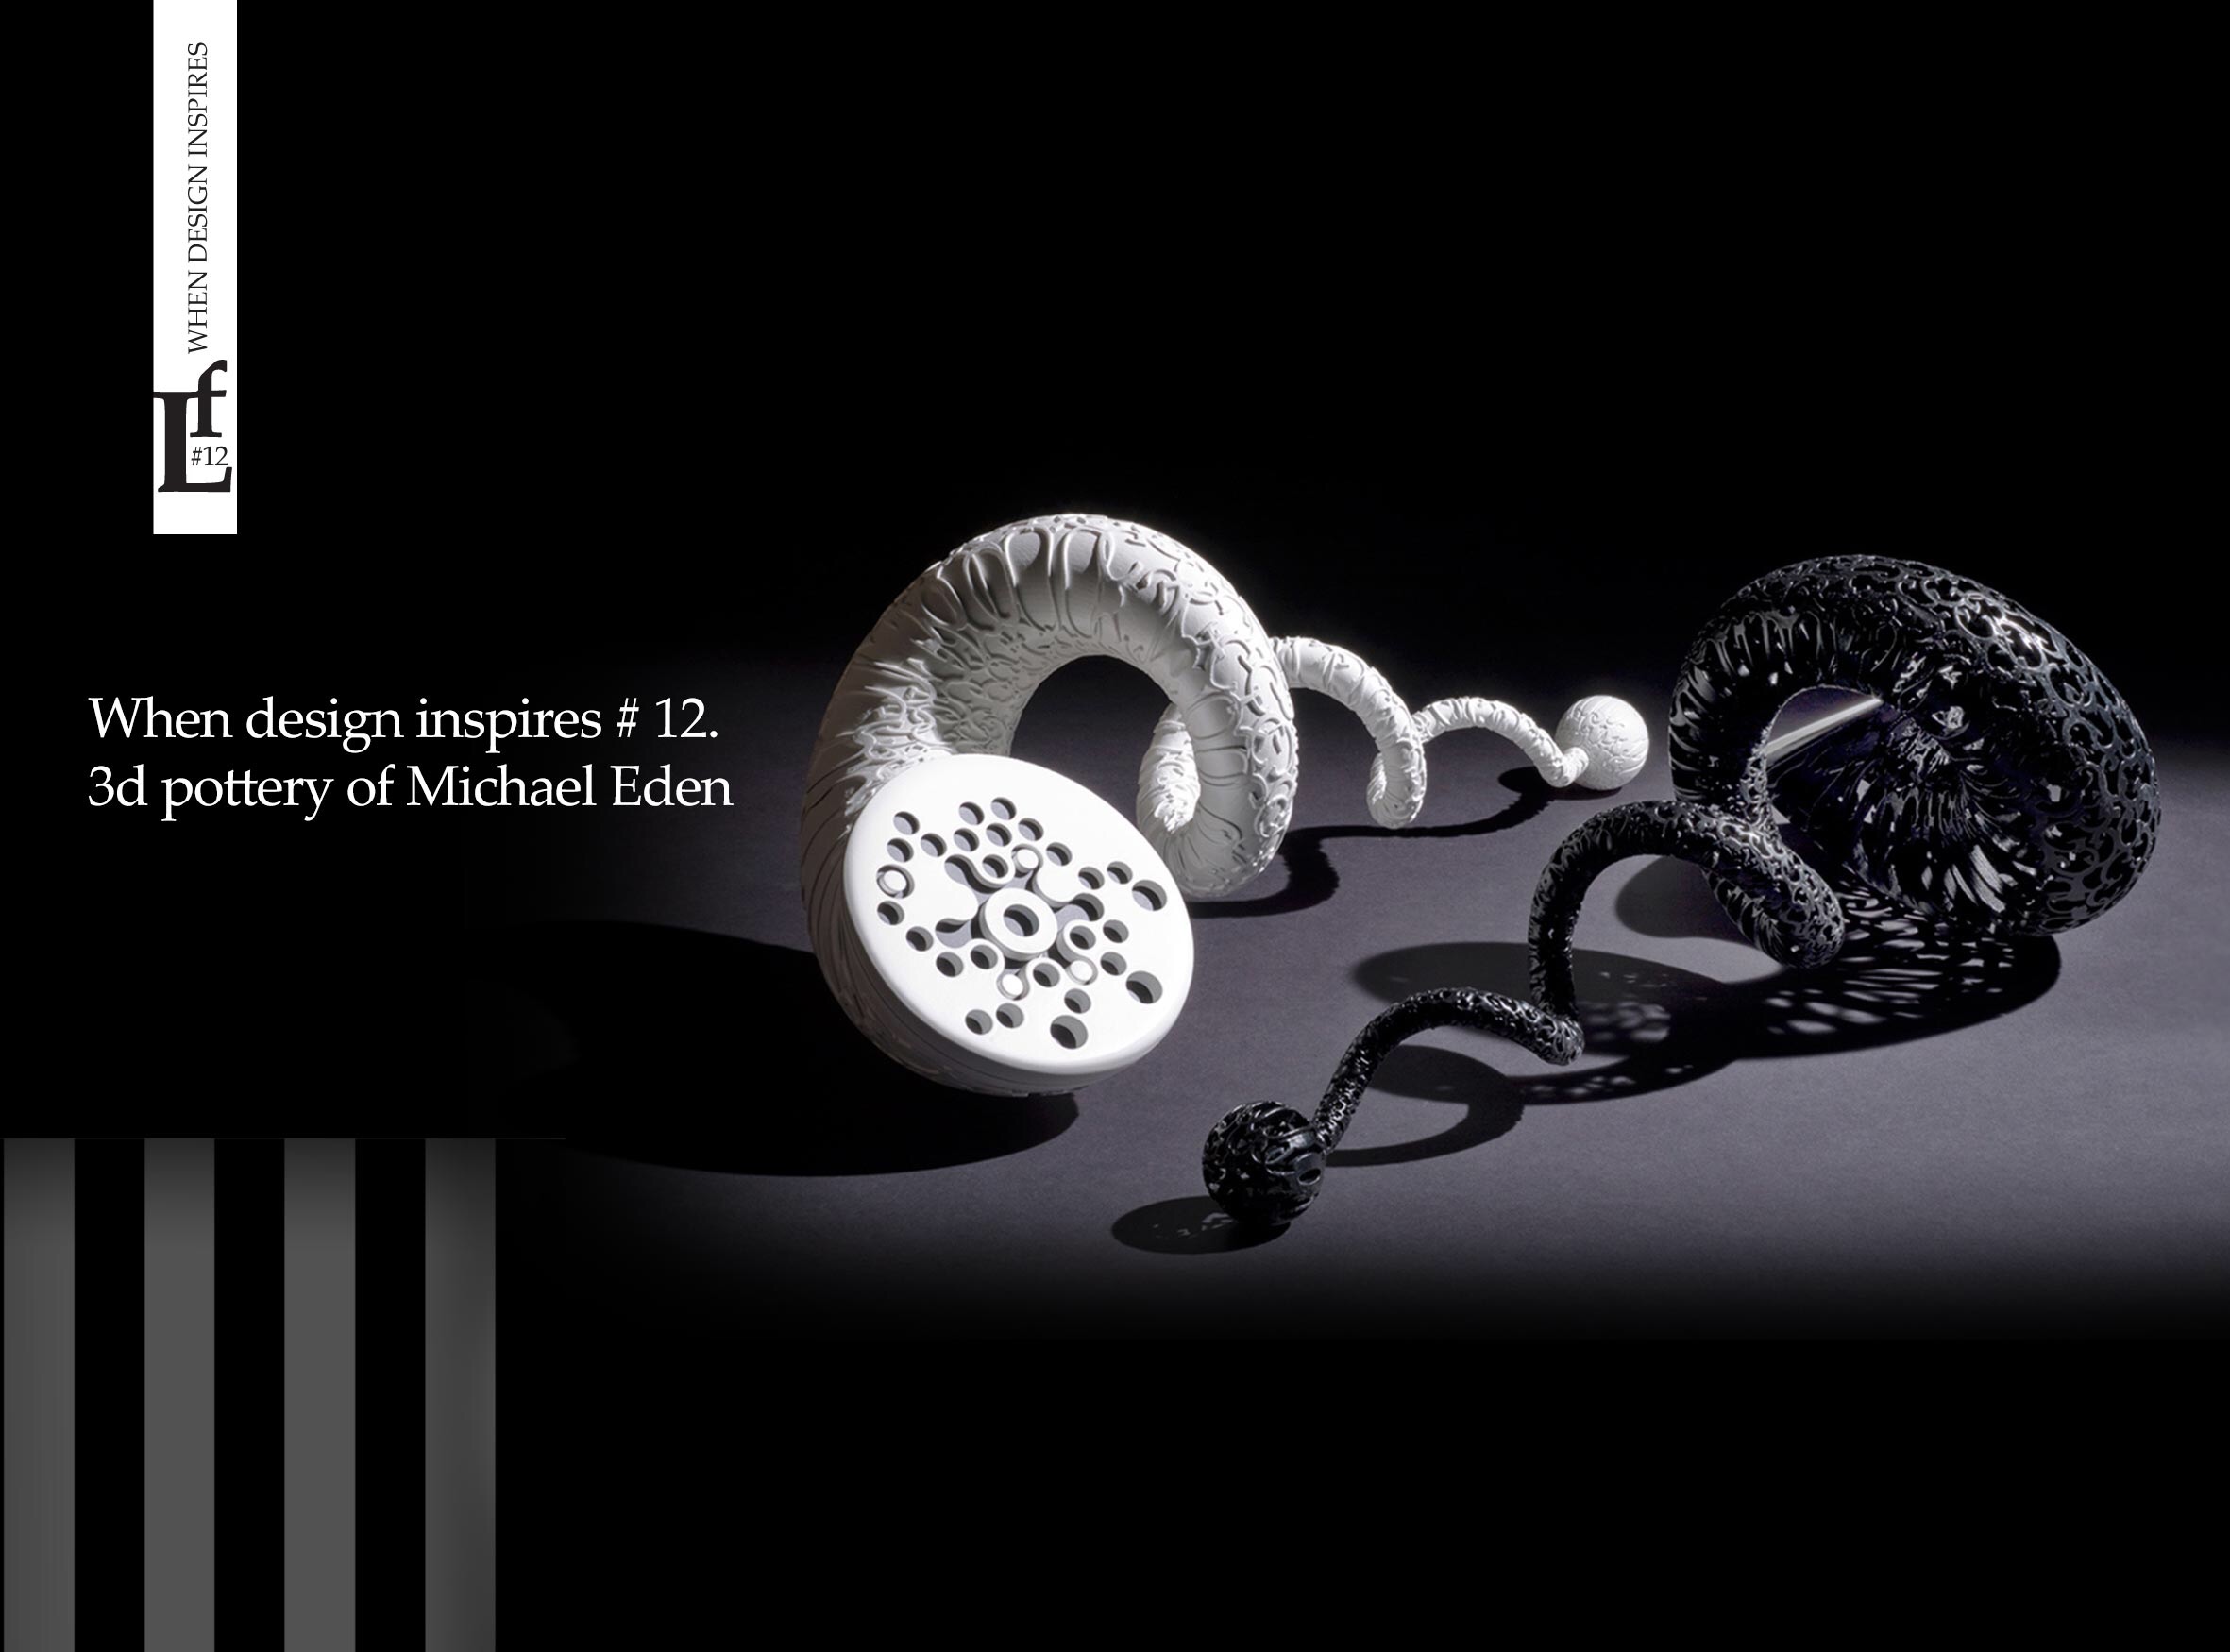 When design inspires # 12. 3d pottery of Michael Eden